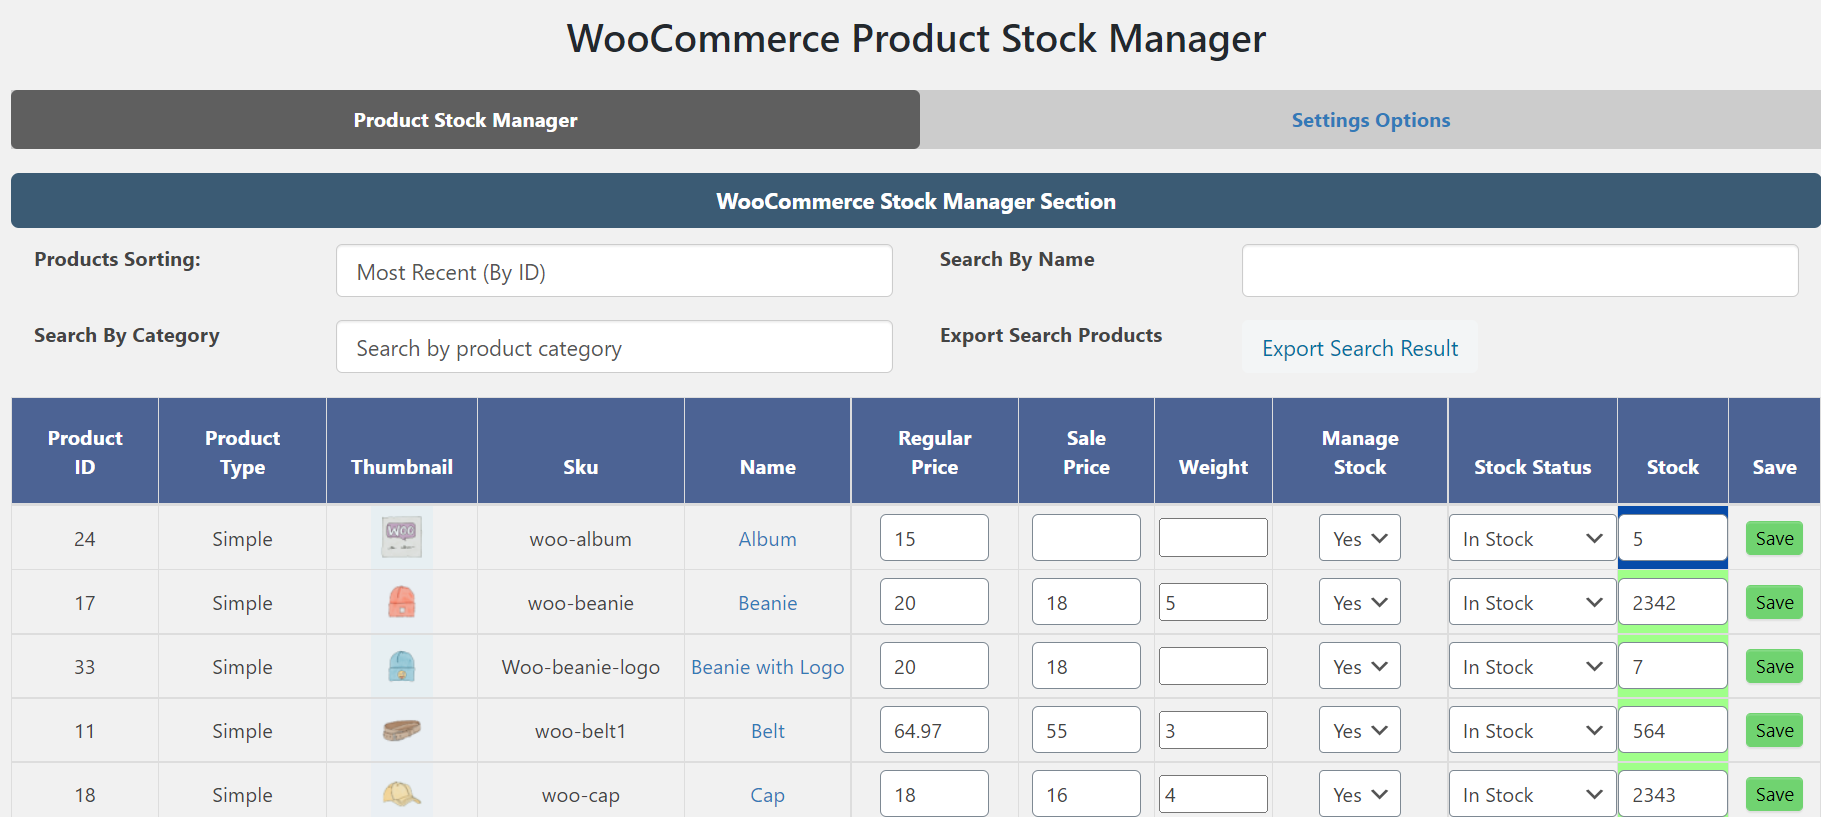 Woocommerce Stock Manager